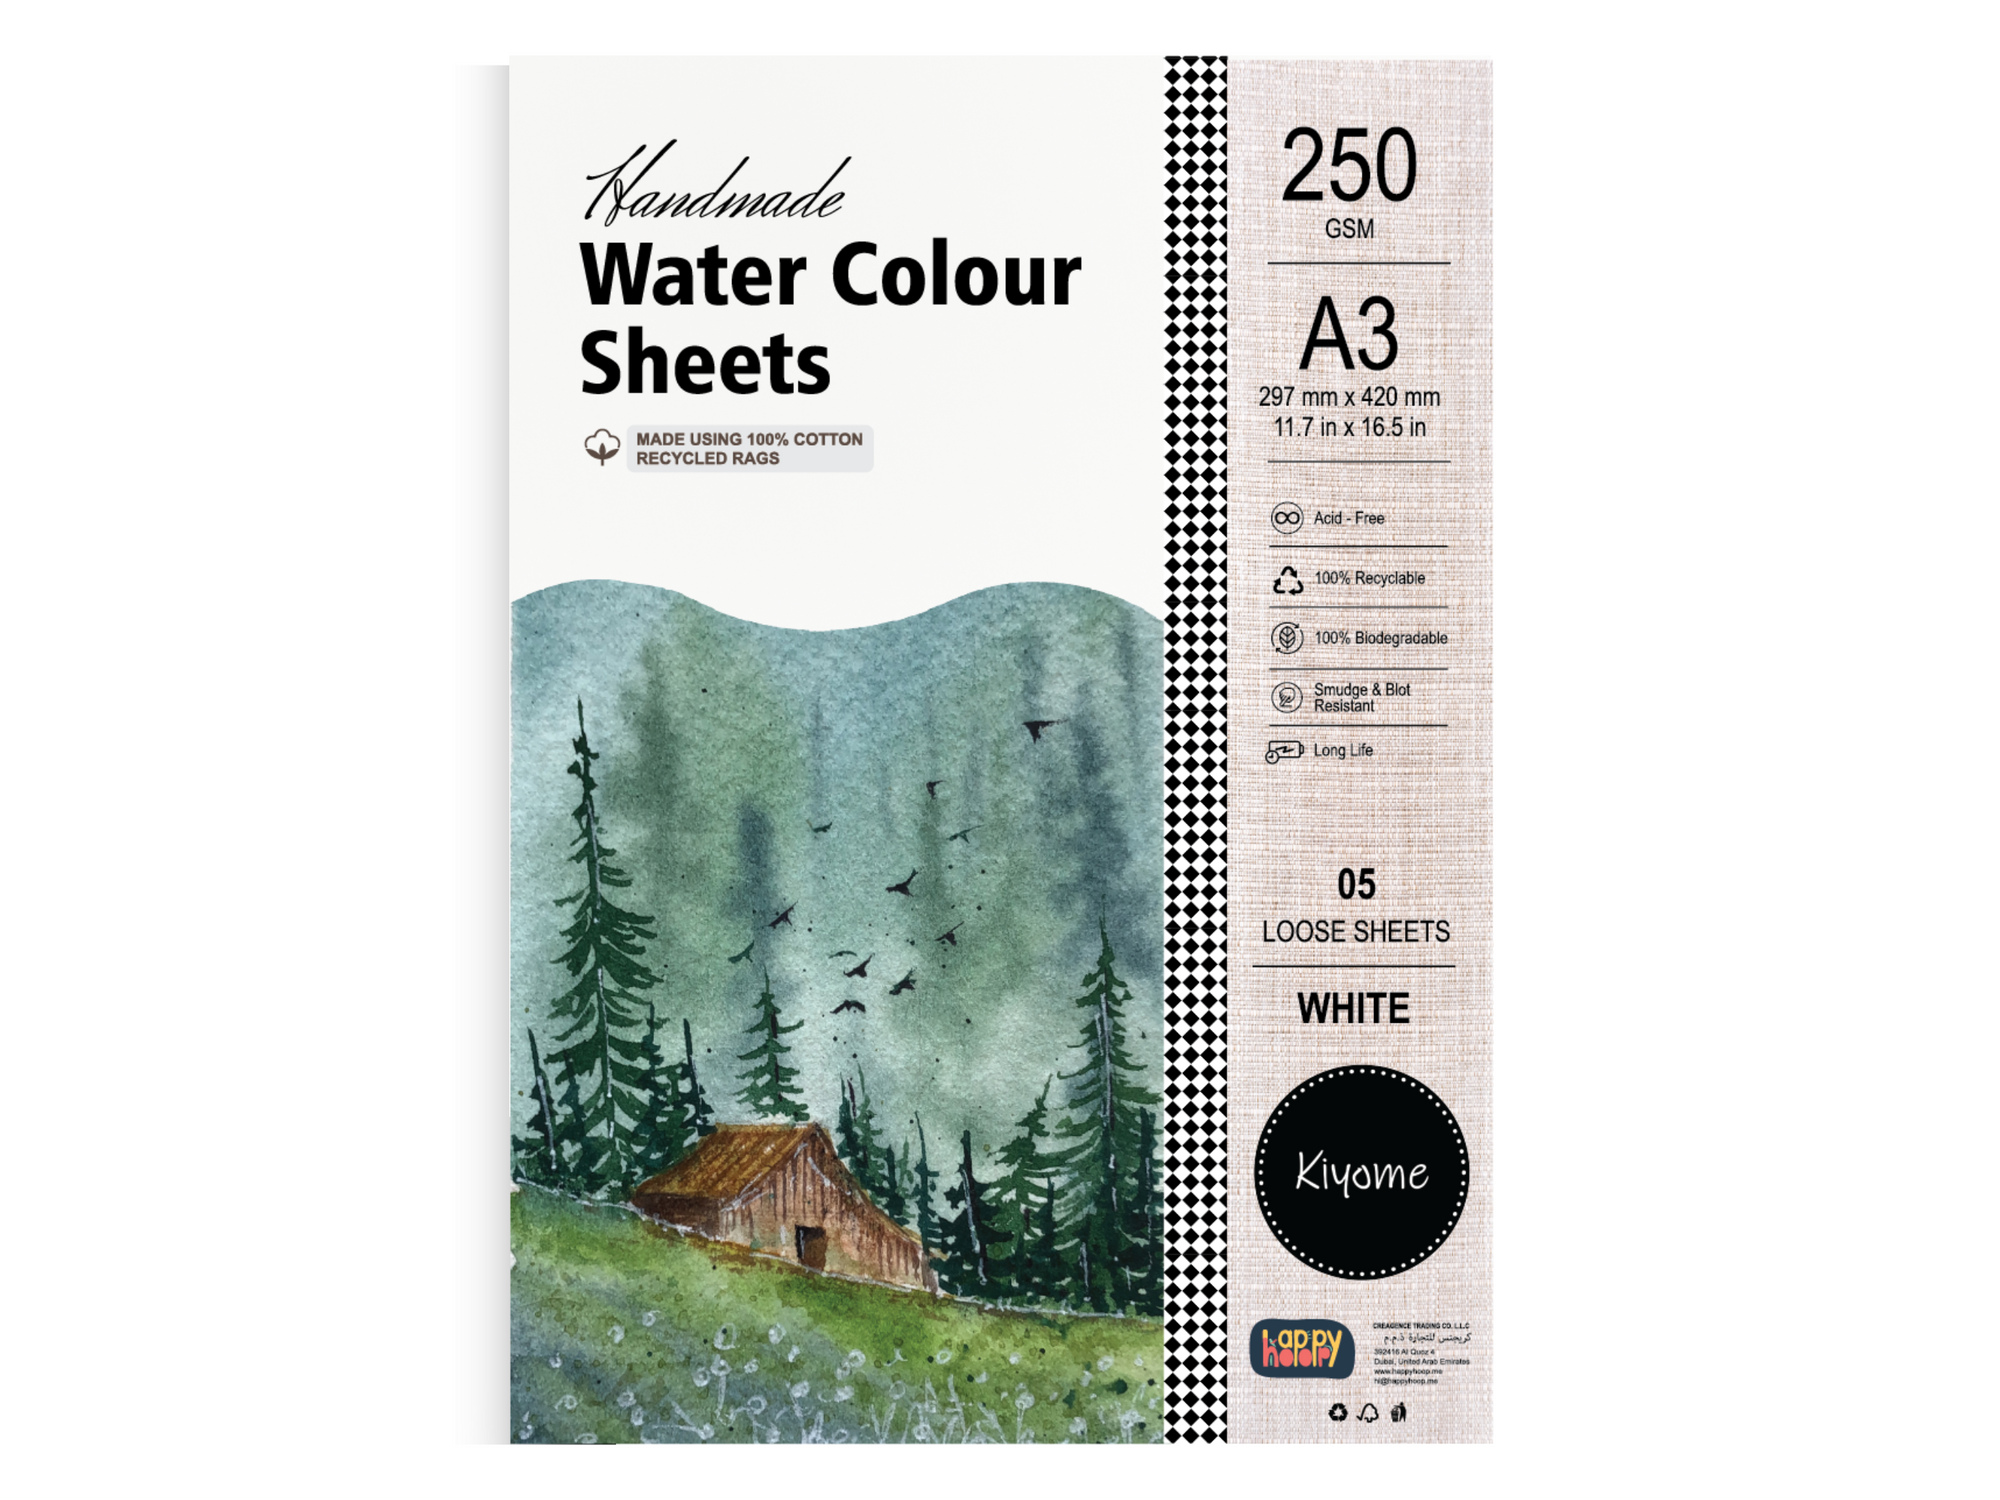 Kiyome Handmade Watercolour Loose Sheets | Cold Pressed | 250 GSM | A5 | 20 Sheets